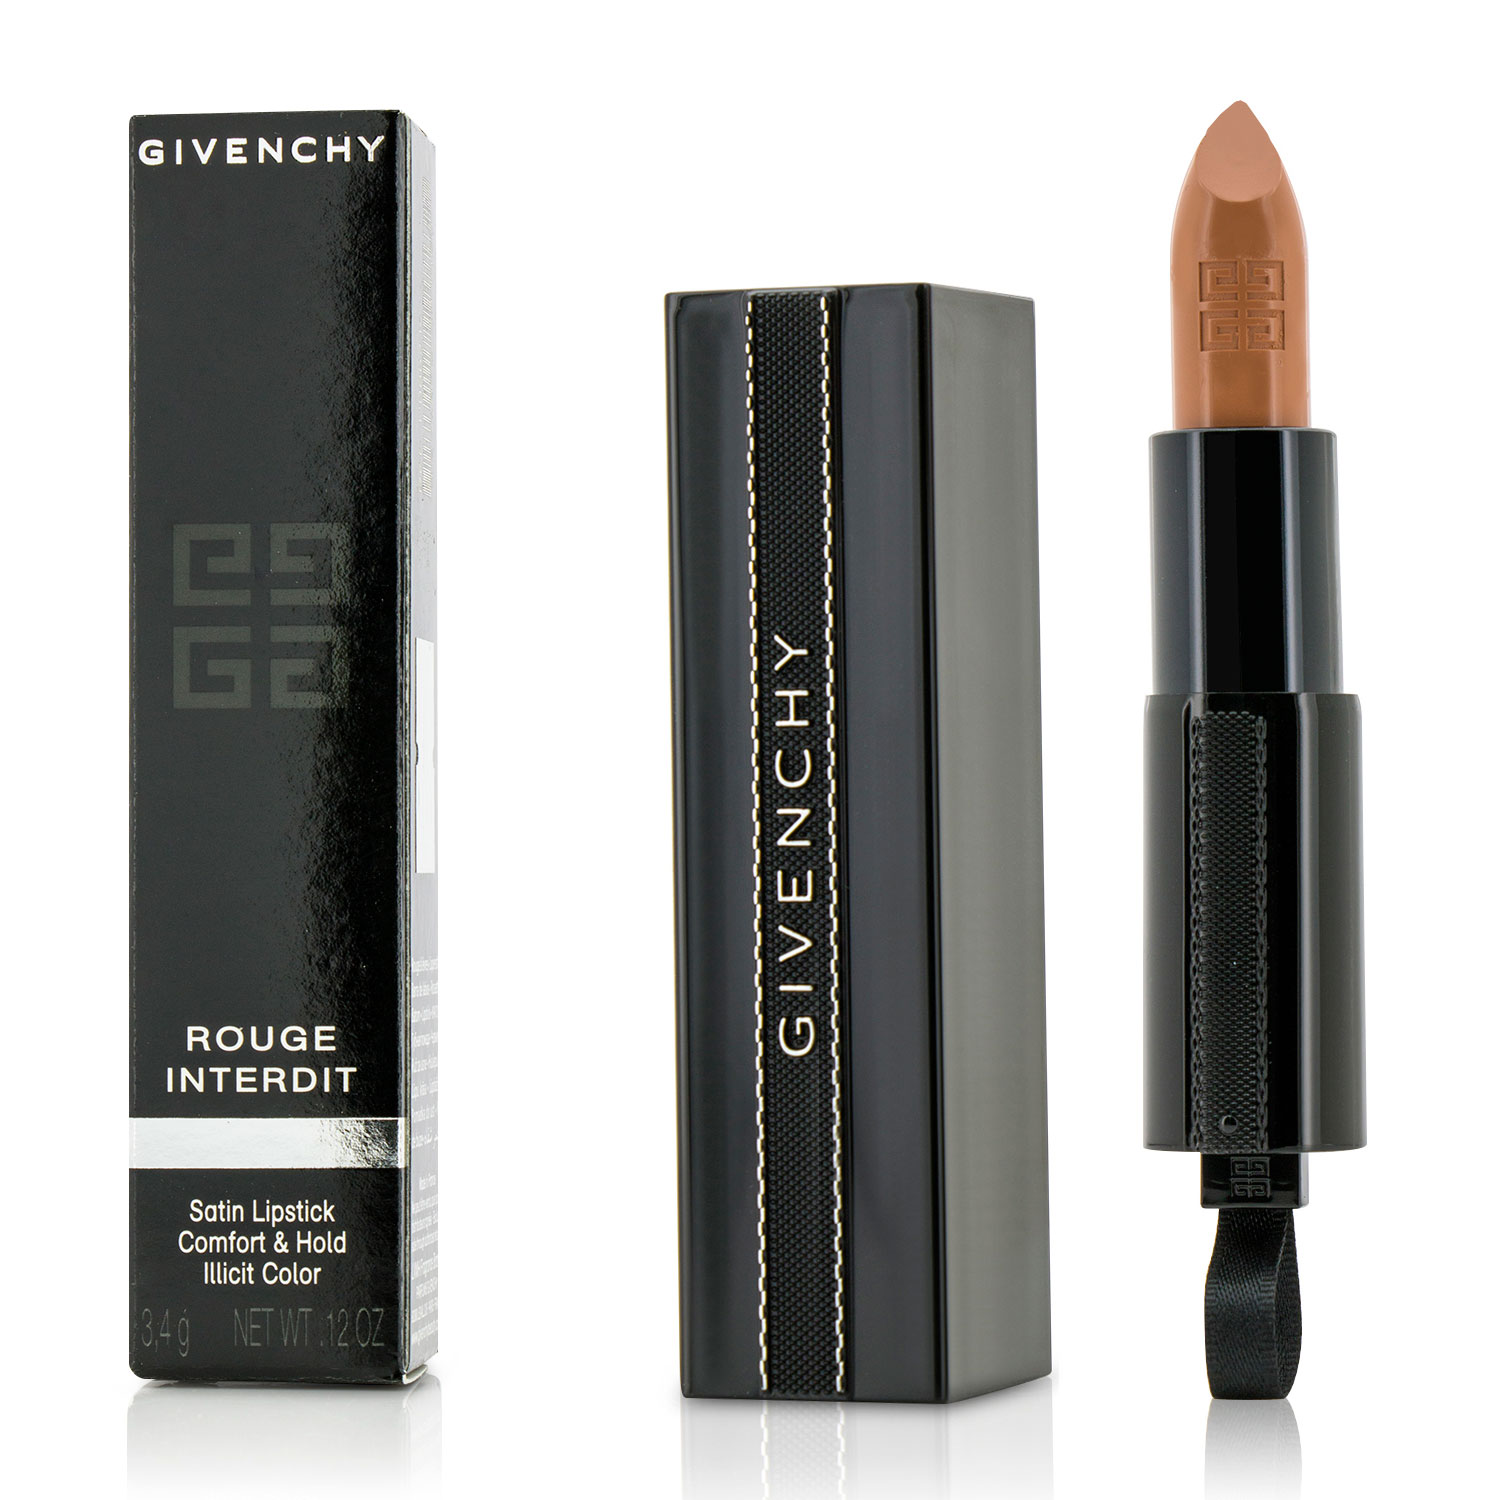 Rouge Interdit Satin Lipstick - # 1 Secret Nude Givenchy Image